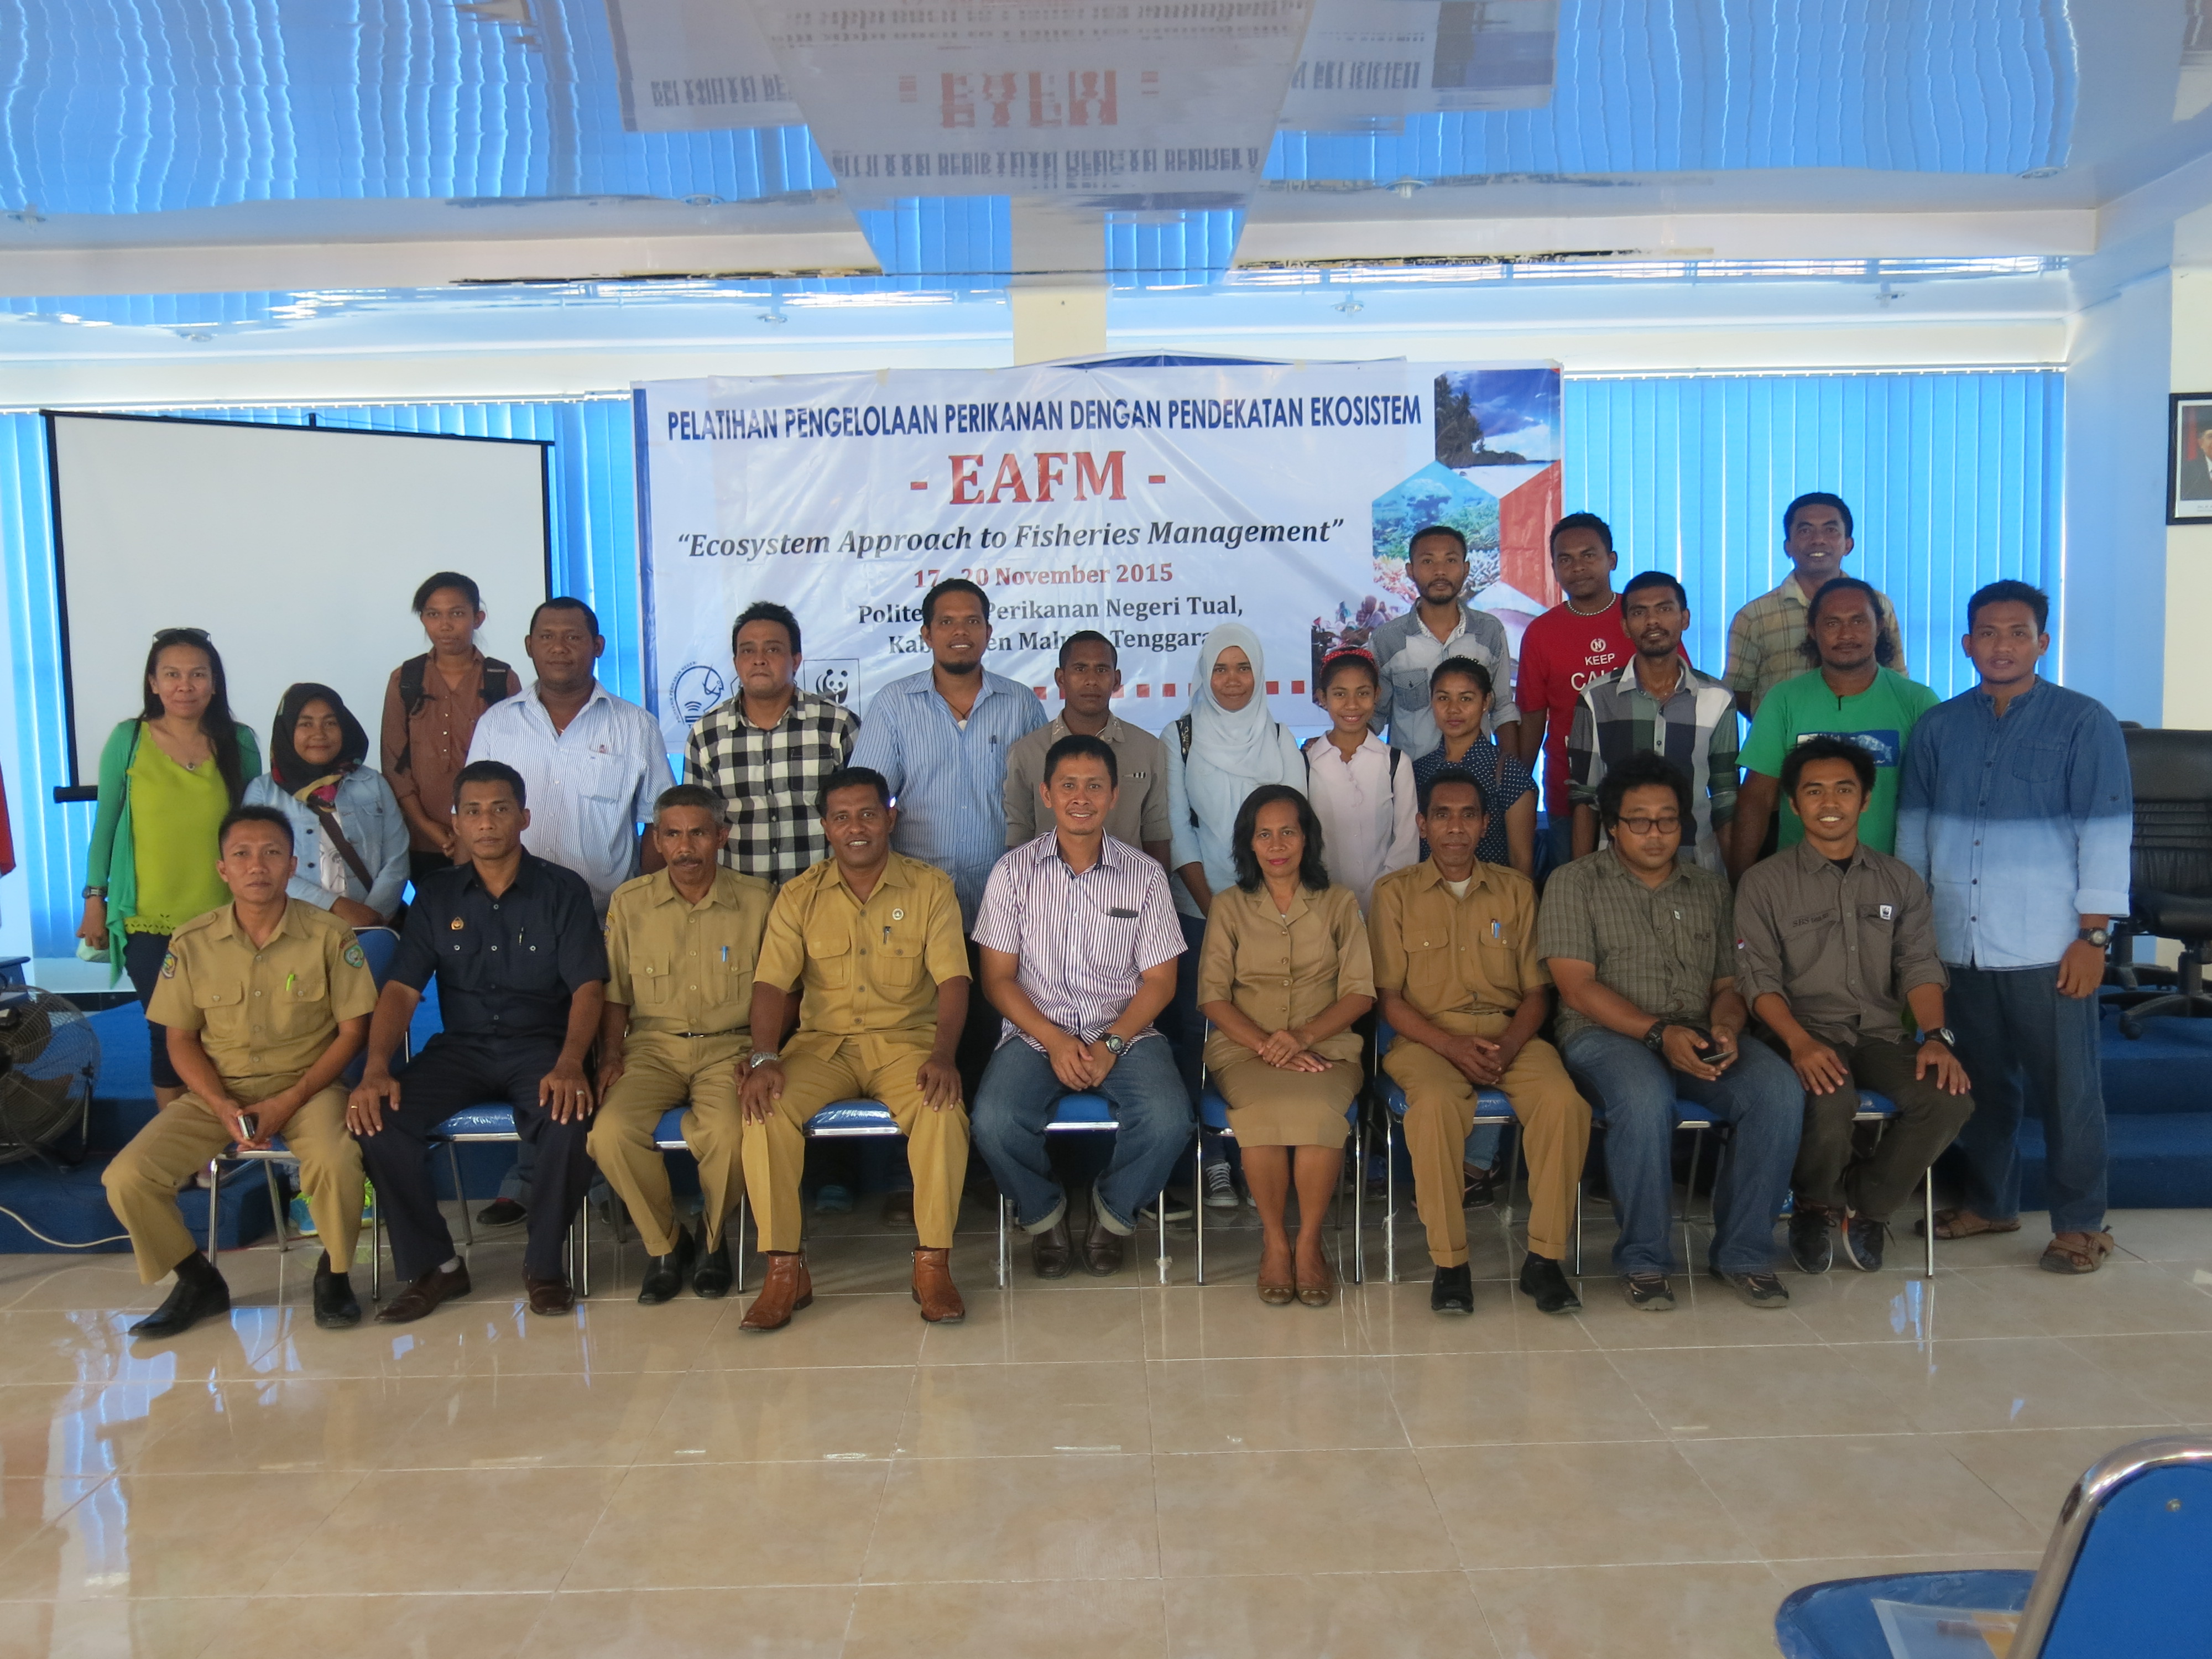 Dukung Pengelolaan Perikanan Berkelanjutan di Maluku Tenggara, WWF dan POLIKANT Adakan Pelatihan EAFM